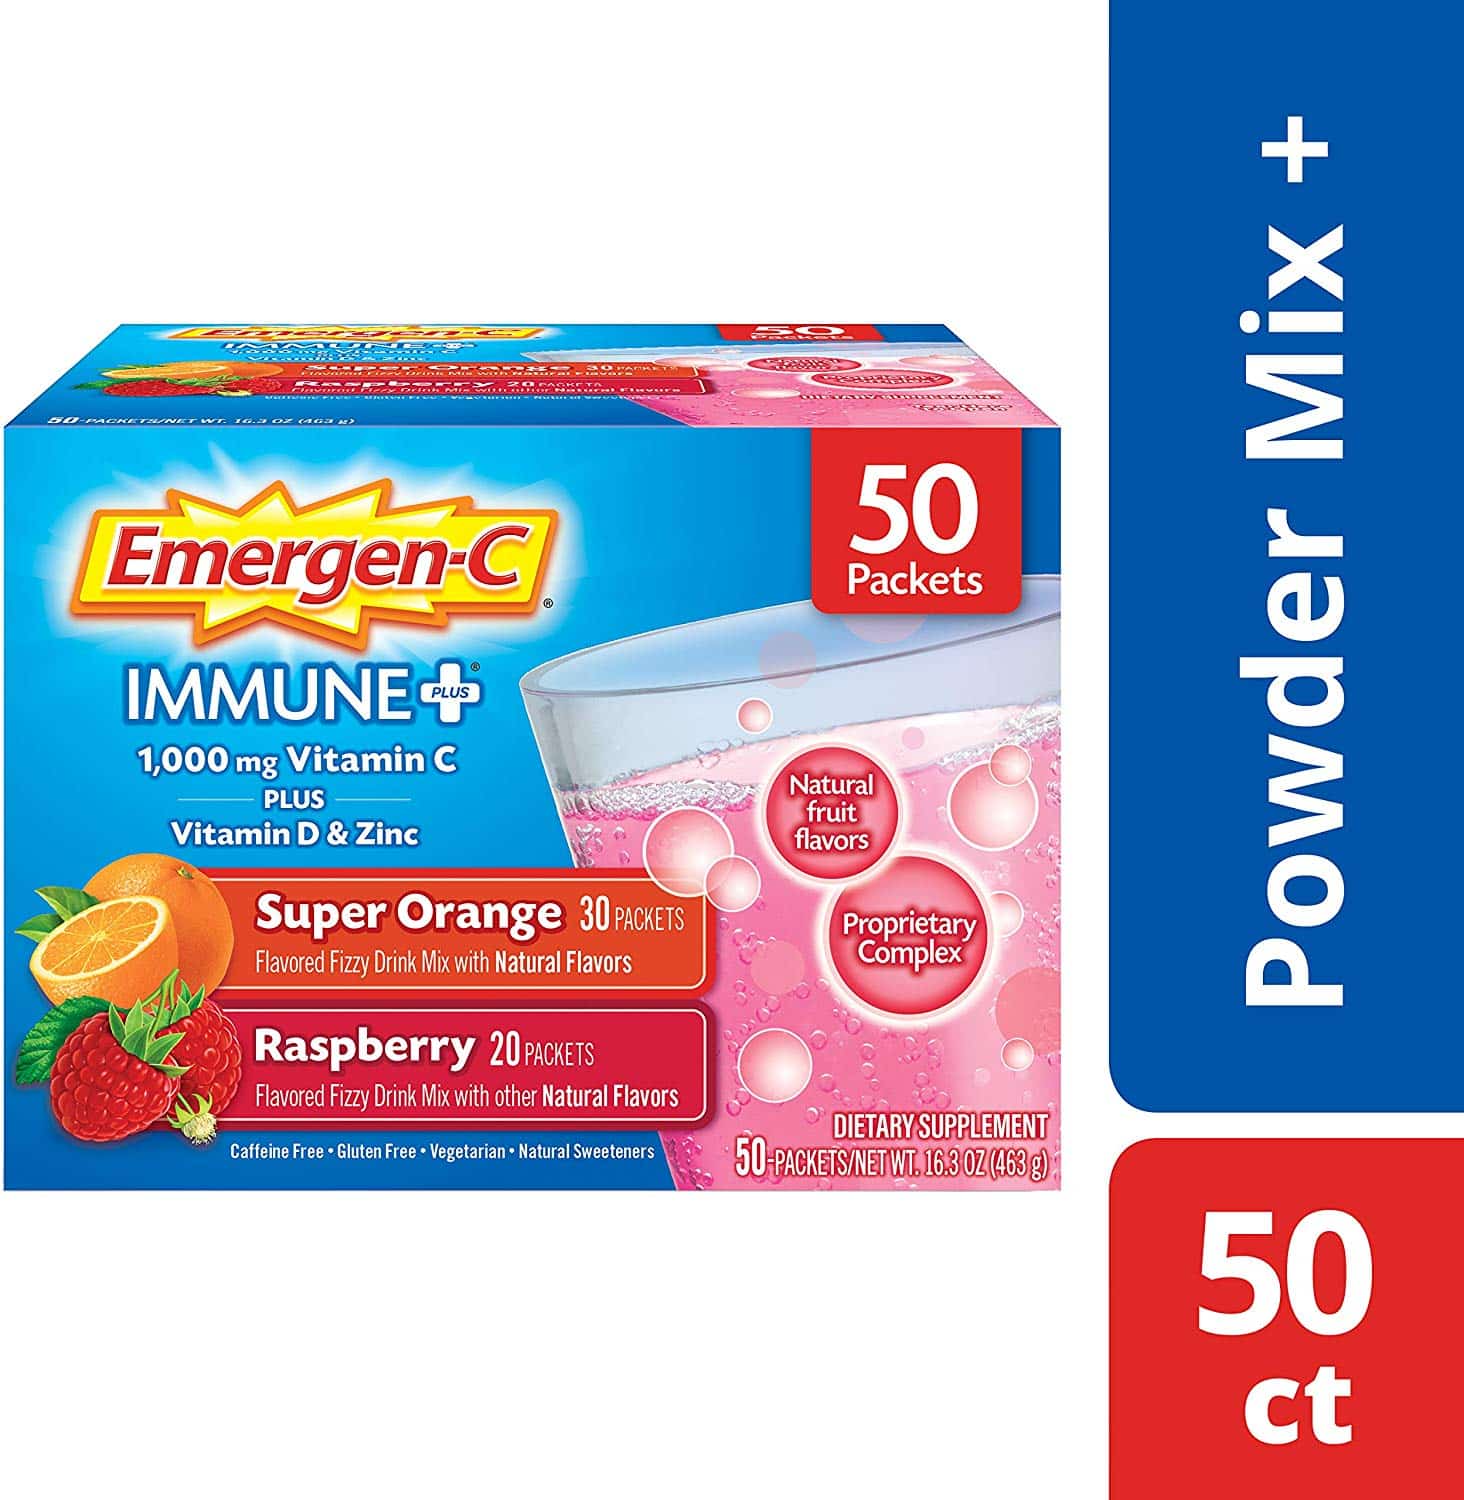 Emergen-C Immune+ Vitamin C 1000mg Powder $9.99 (REG $19.99)